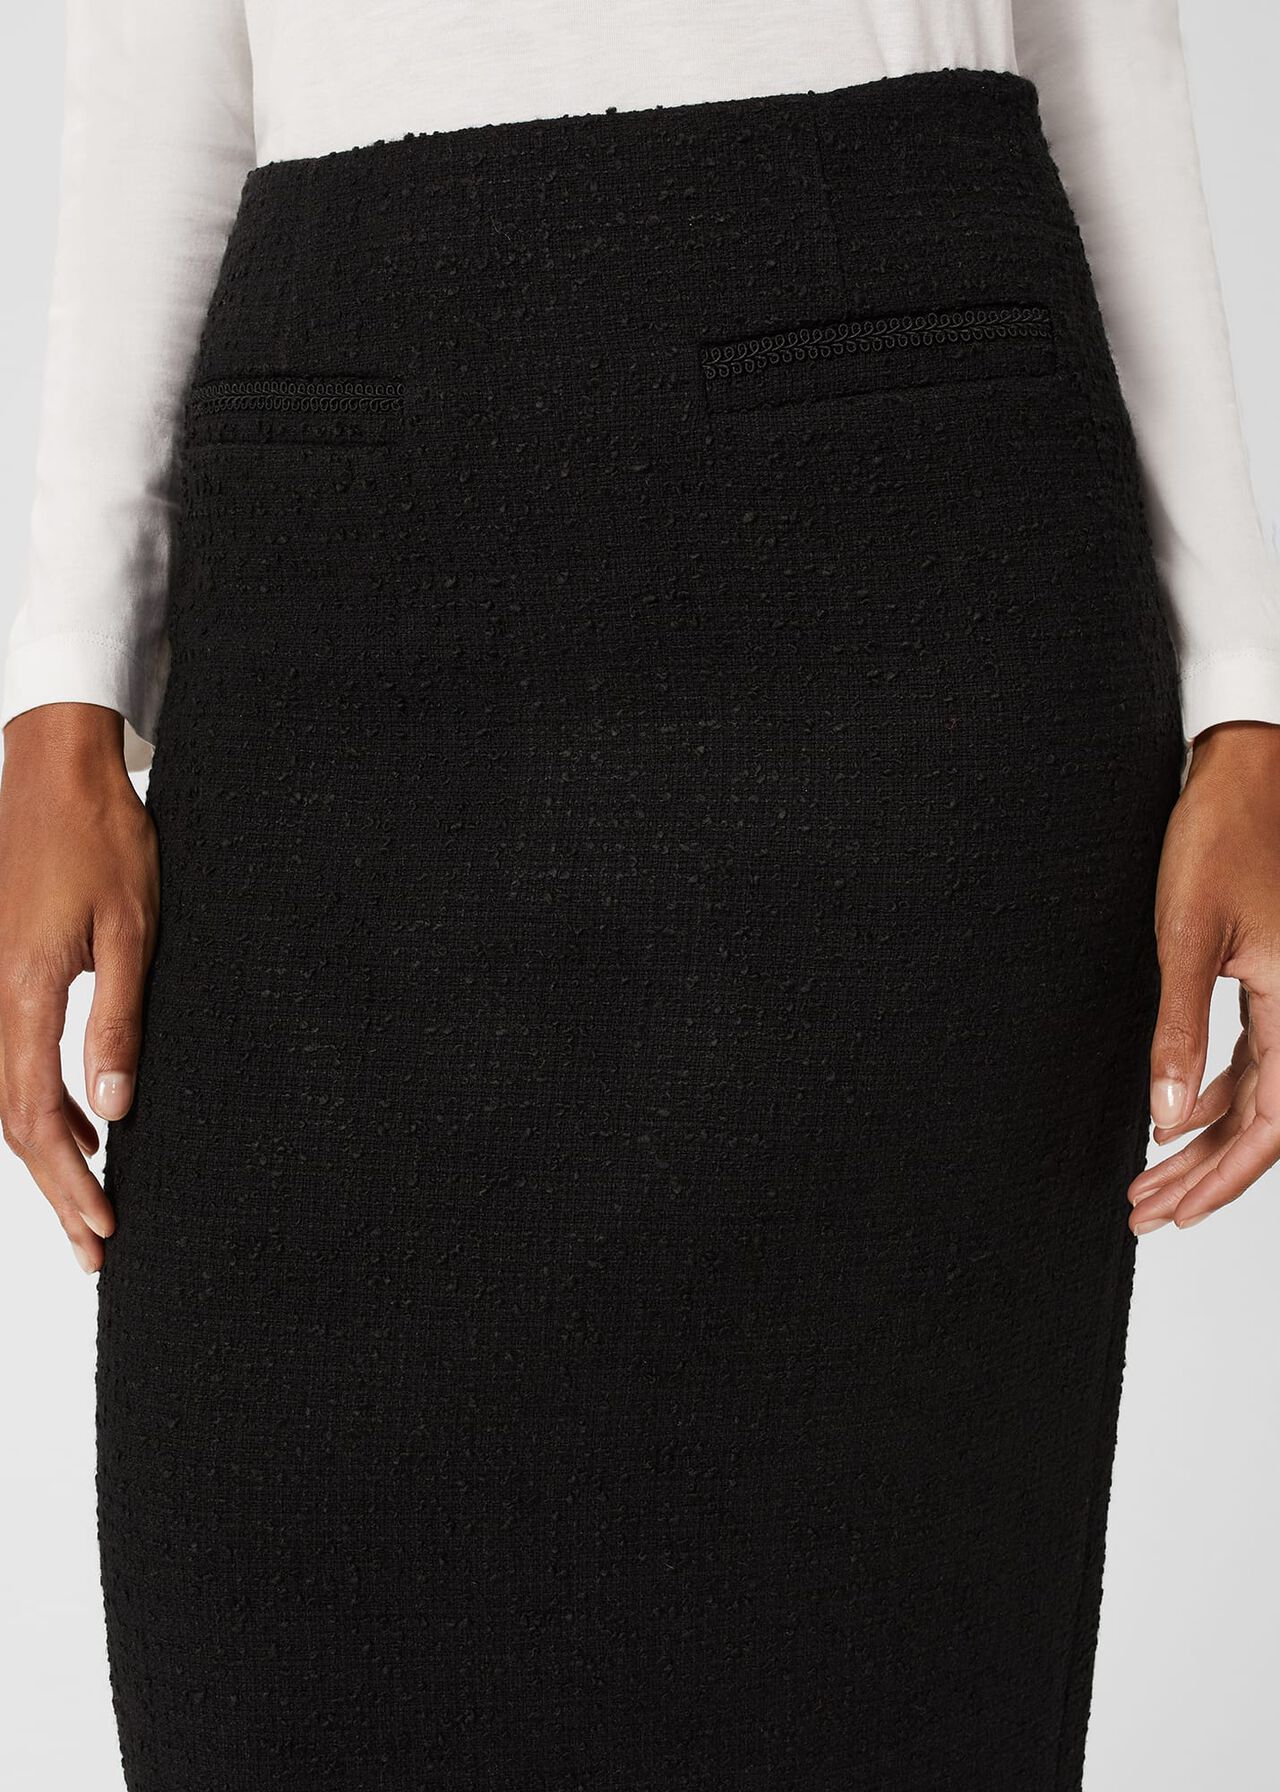 Gabi Tweed Skirt, Black, hi-res